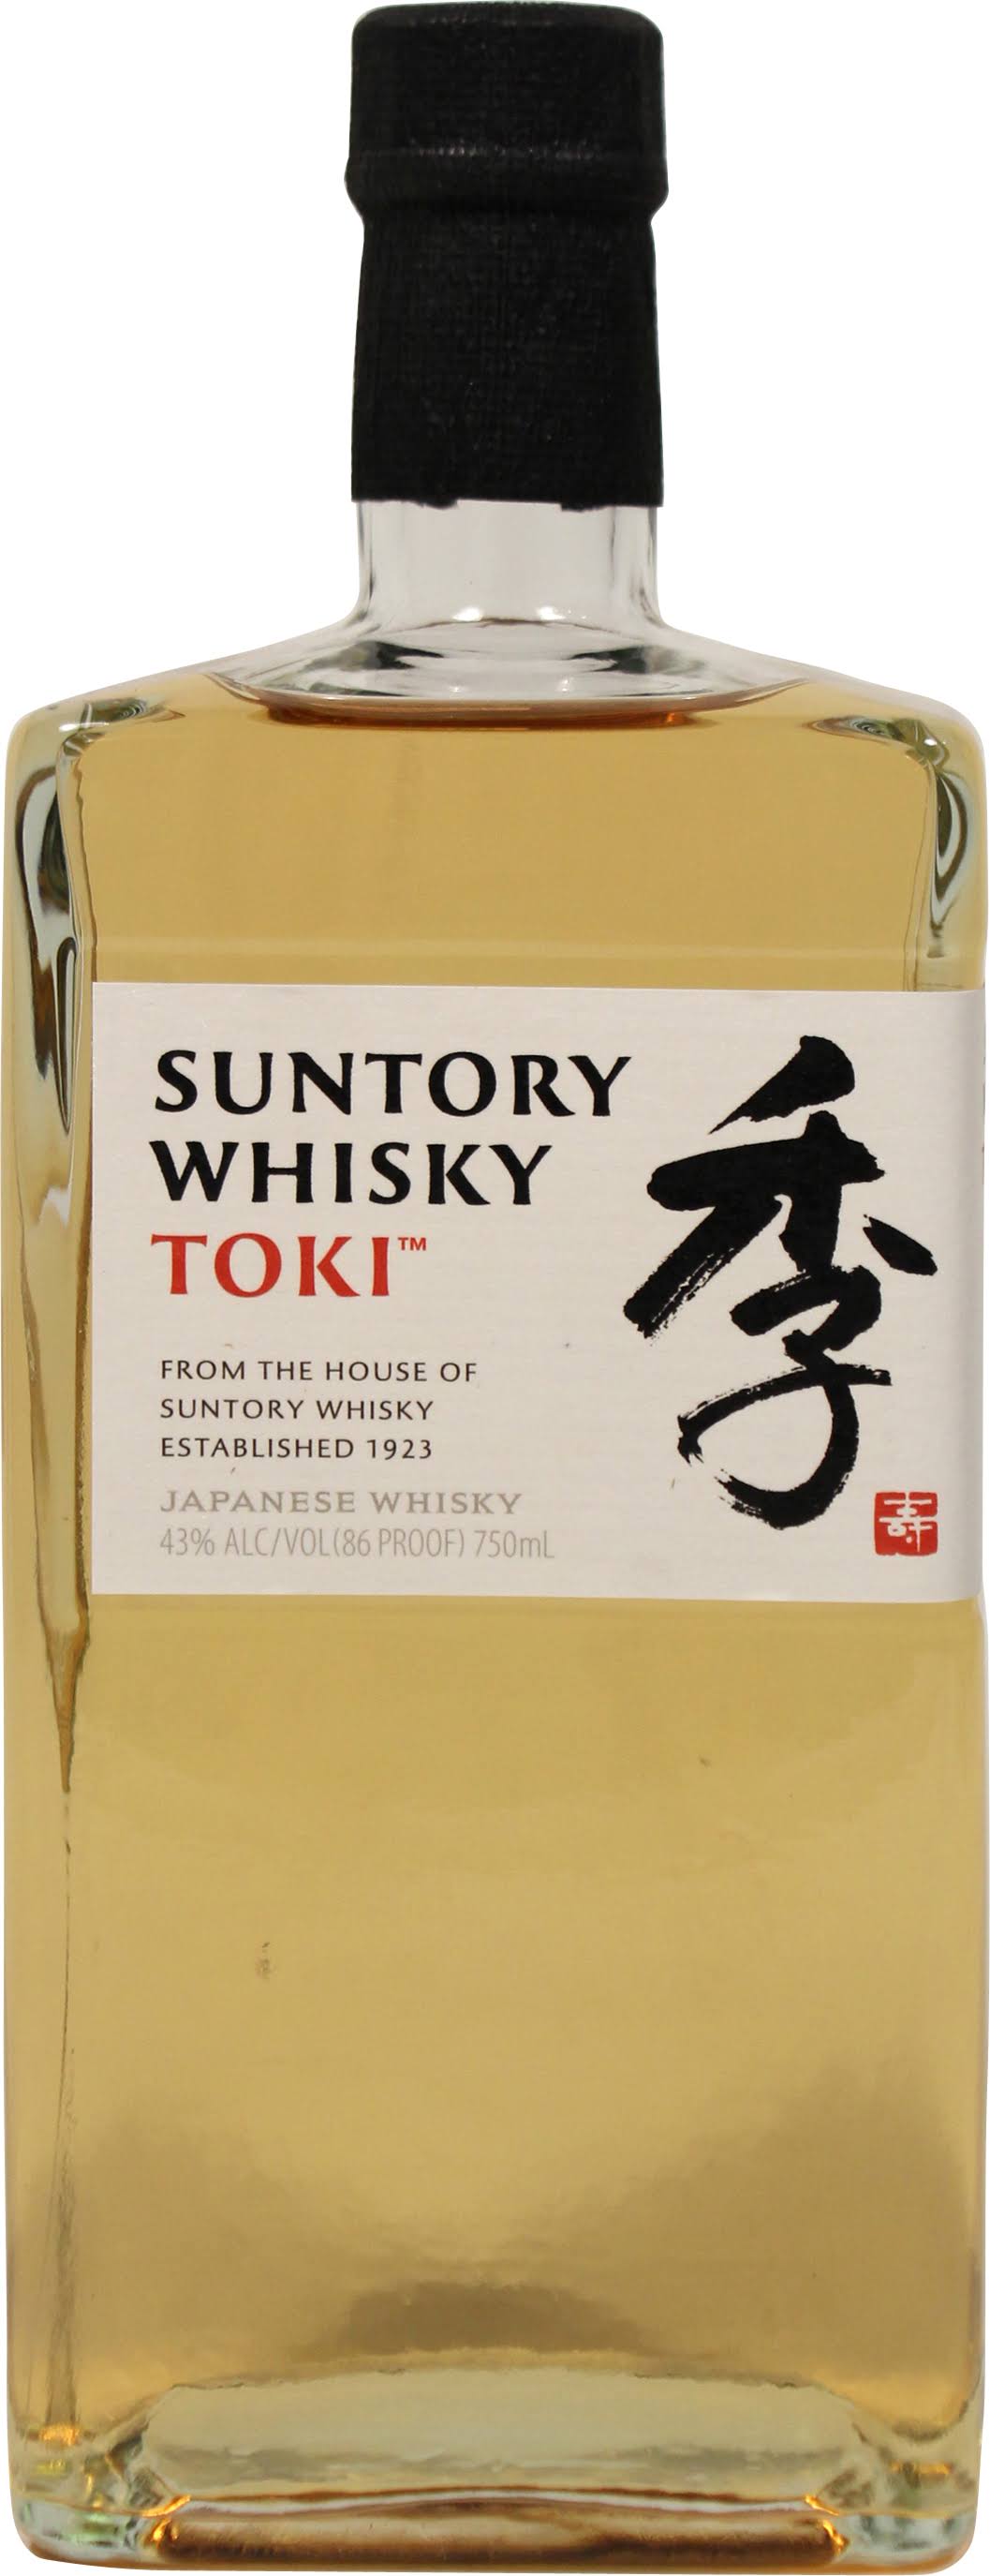 Suntory Toki Whisky - 750 ml bottle